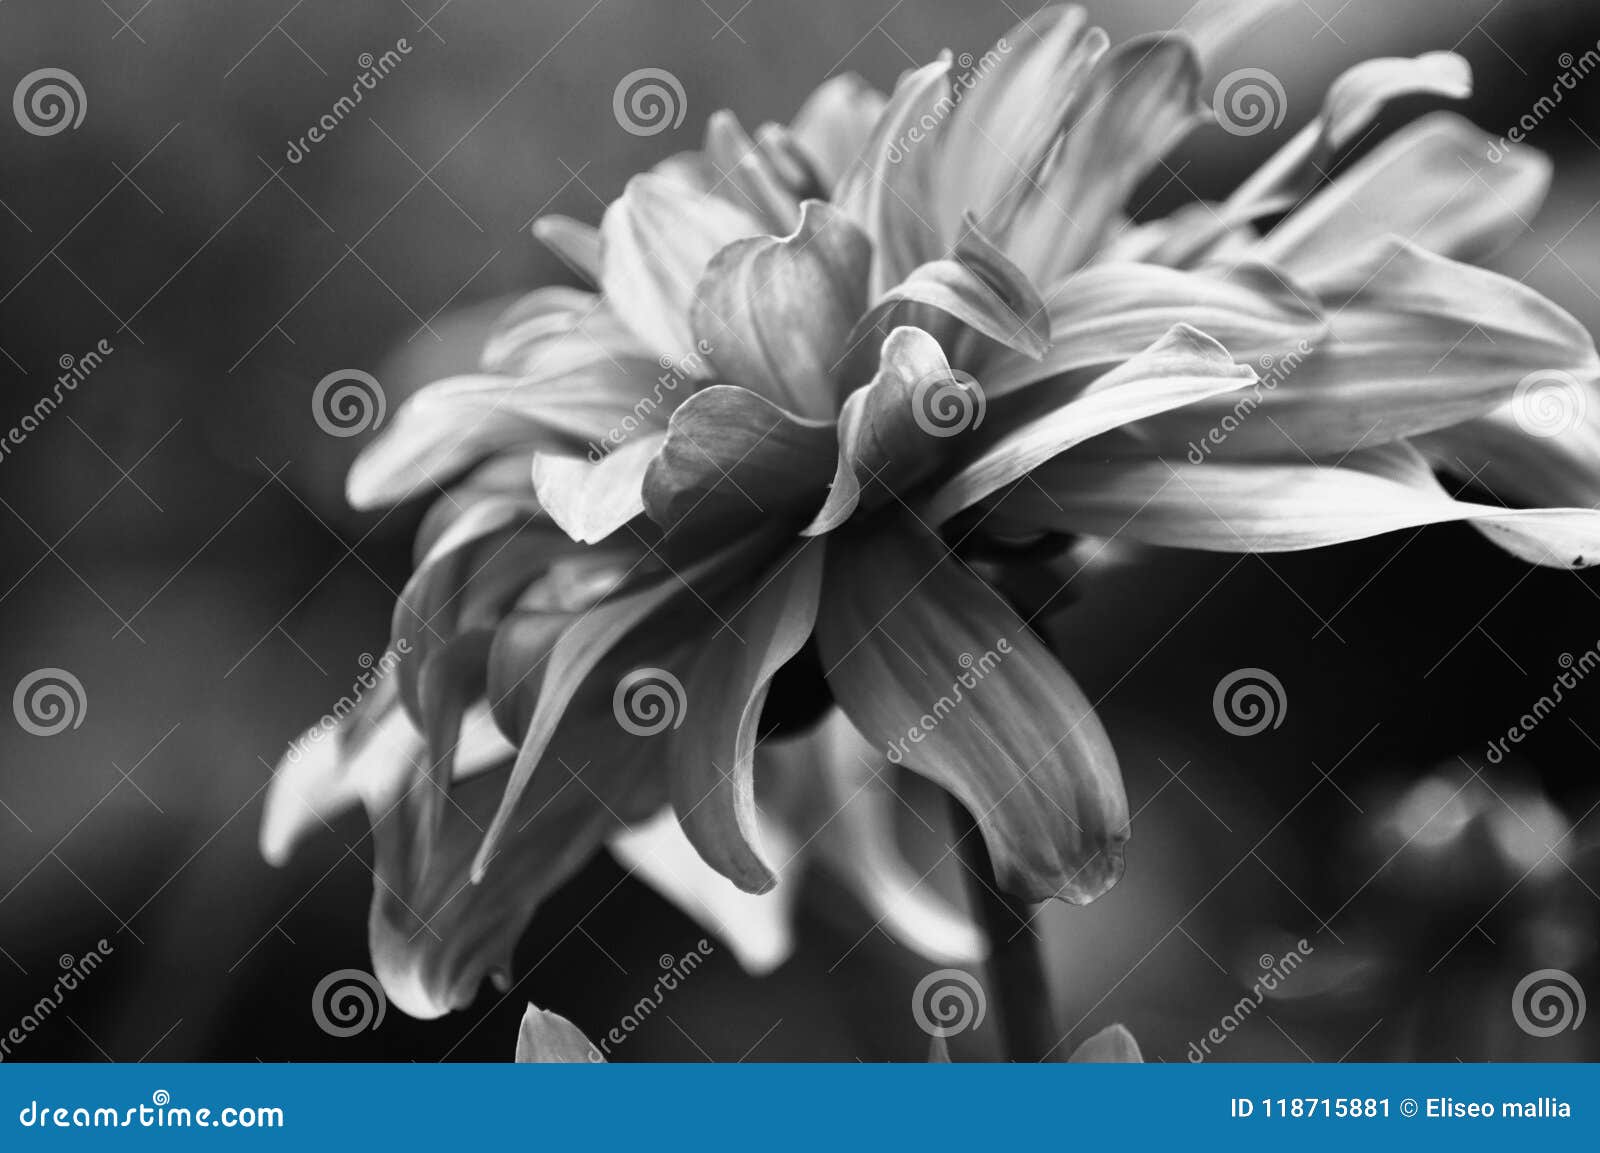 flower in blackandwhite